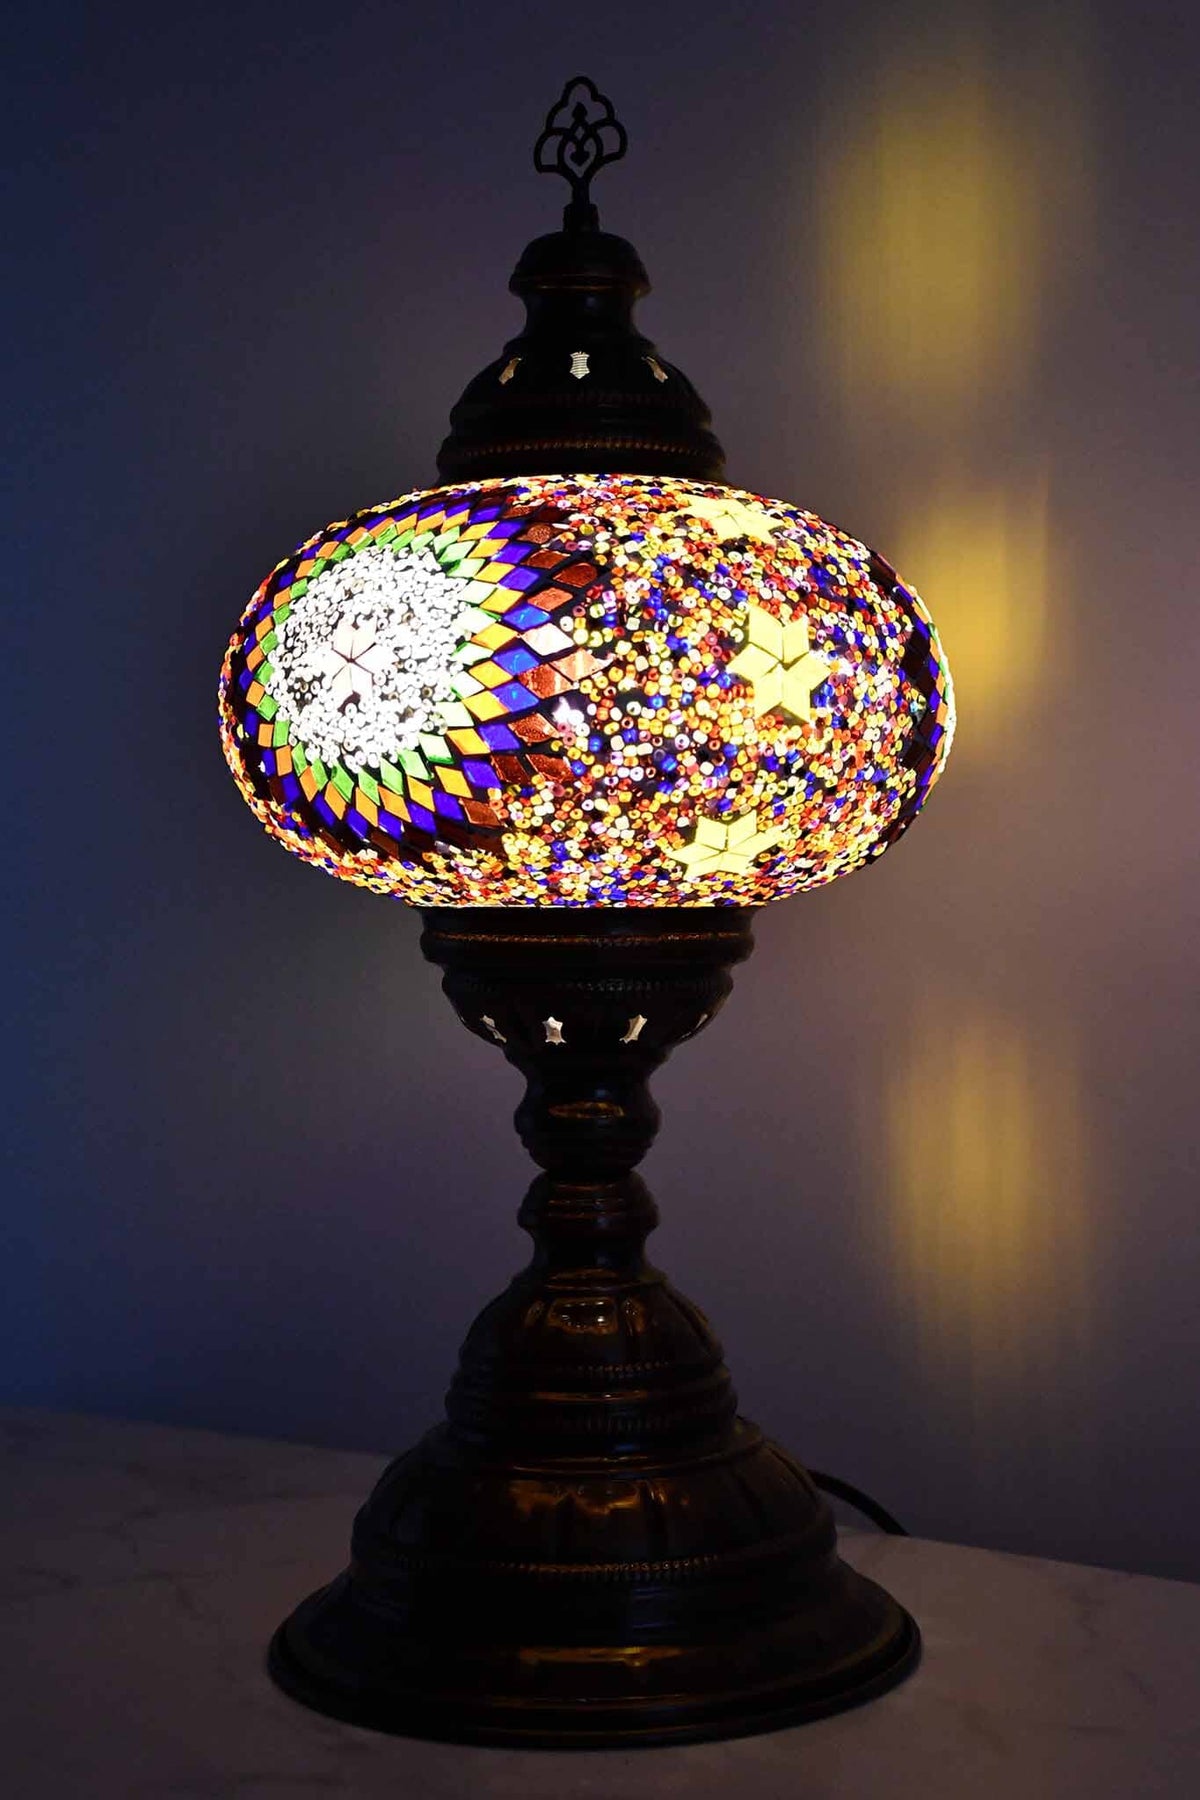 Turkish Table Lamp Large Colourful Round White Star Lighting Sydney Grand Bazaar 